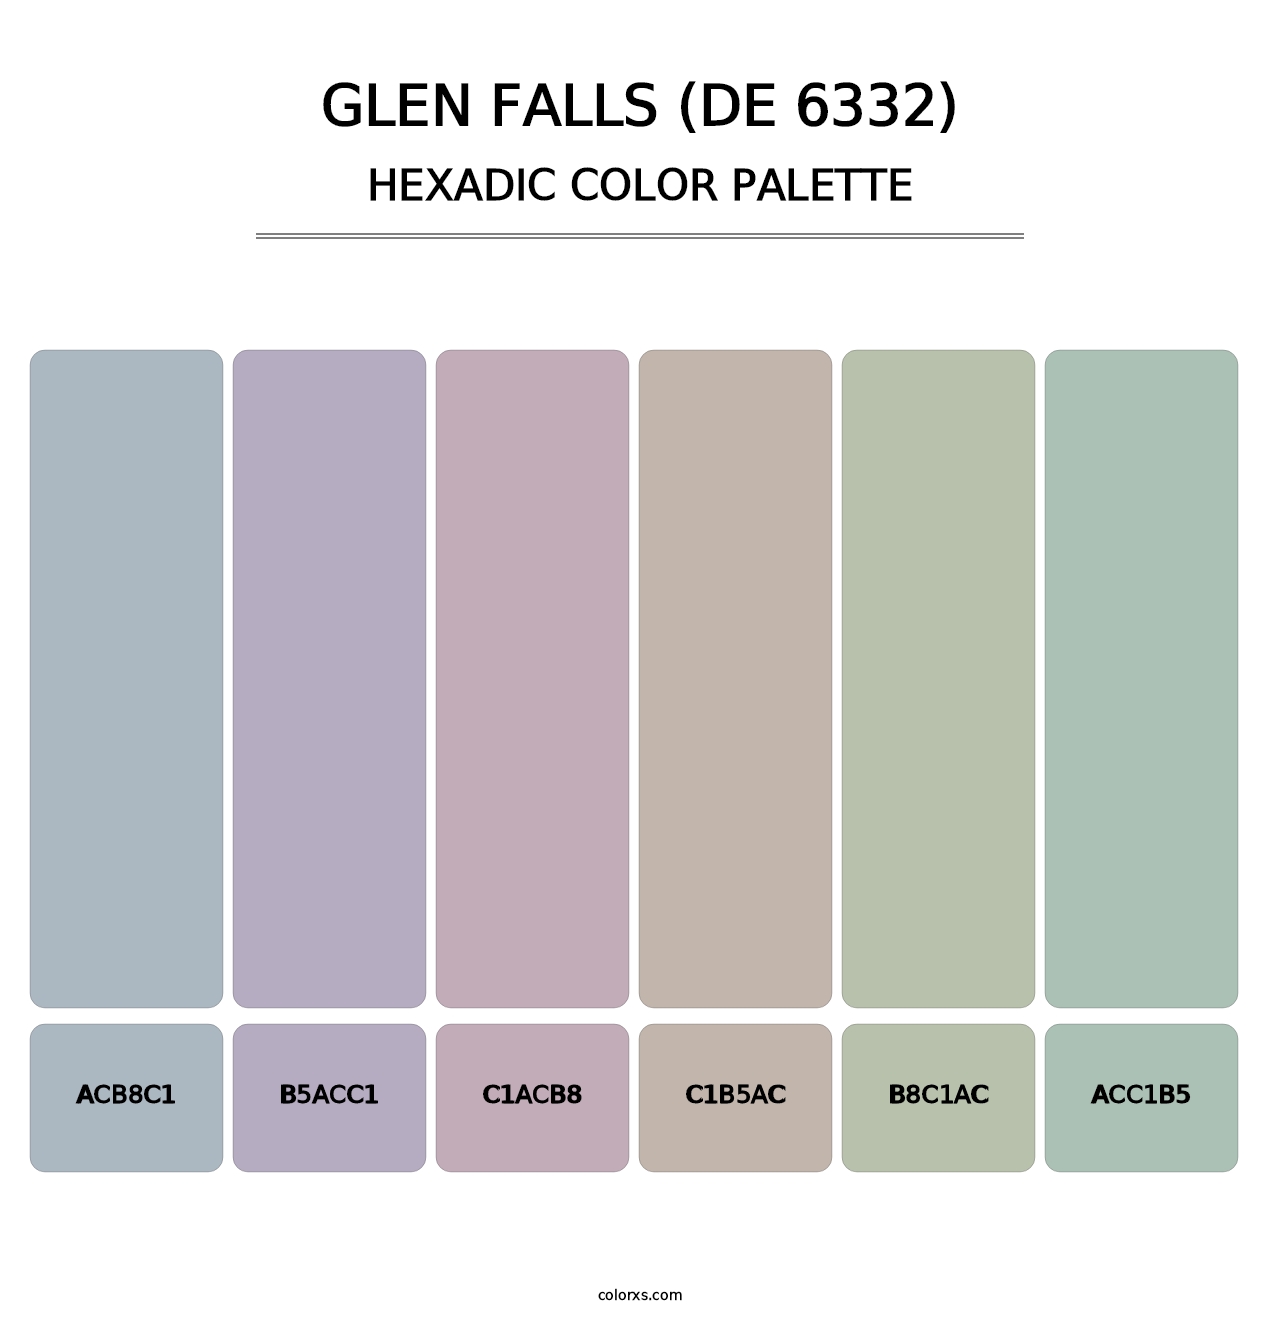 Glen Falls (DE 6332) - Hexadic Color Palette